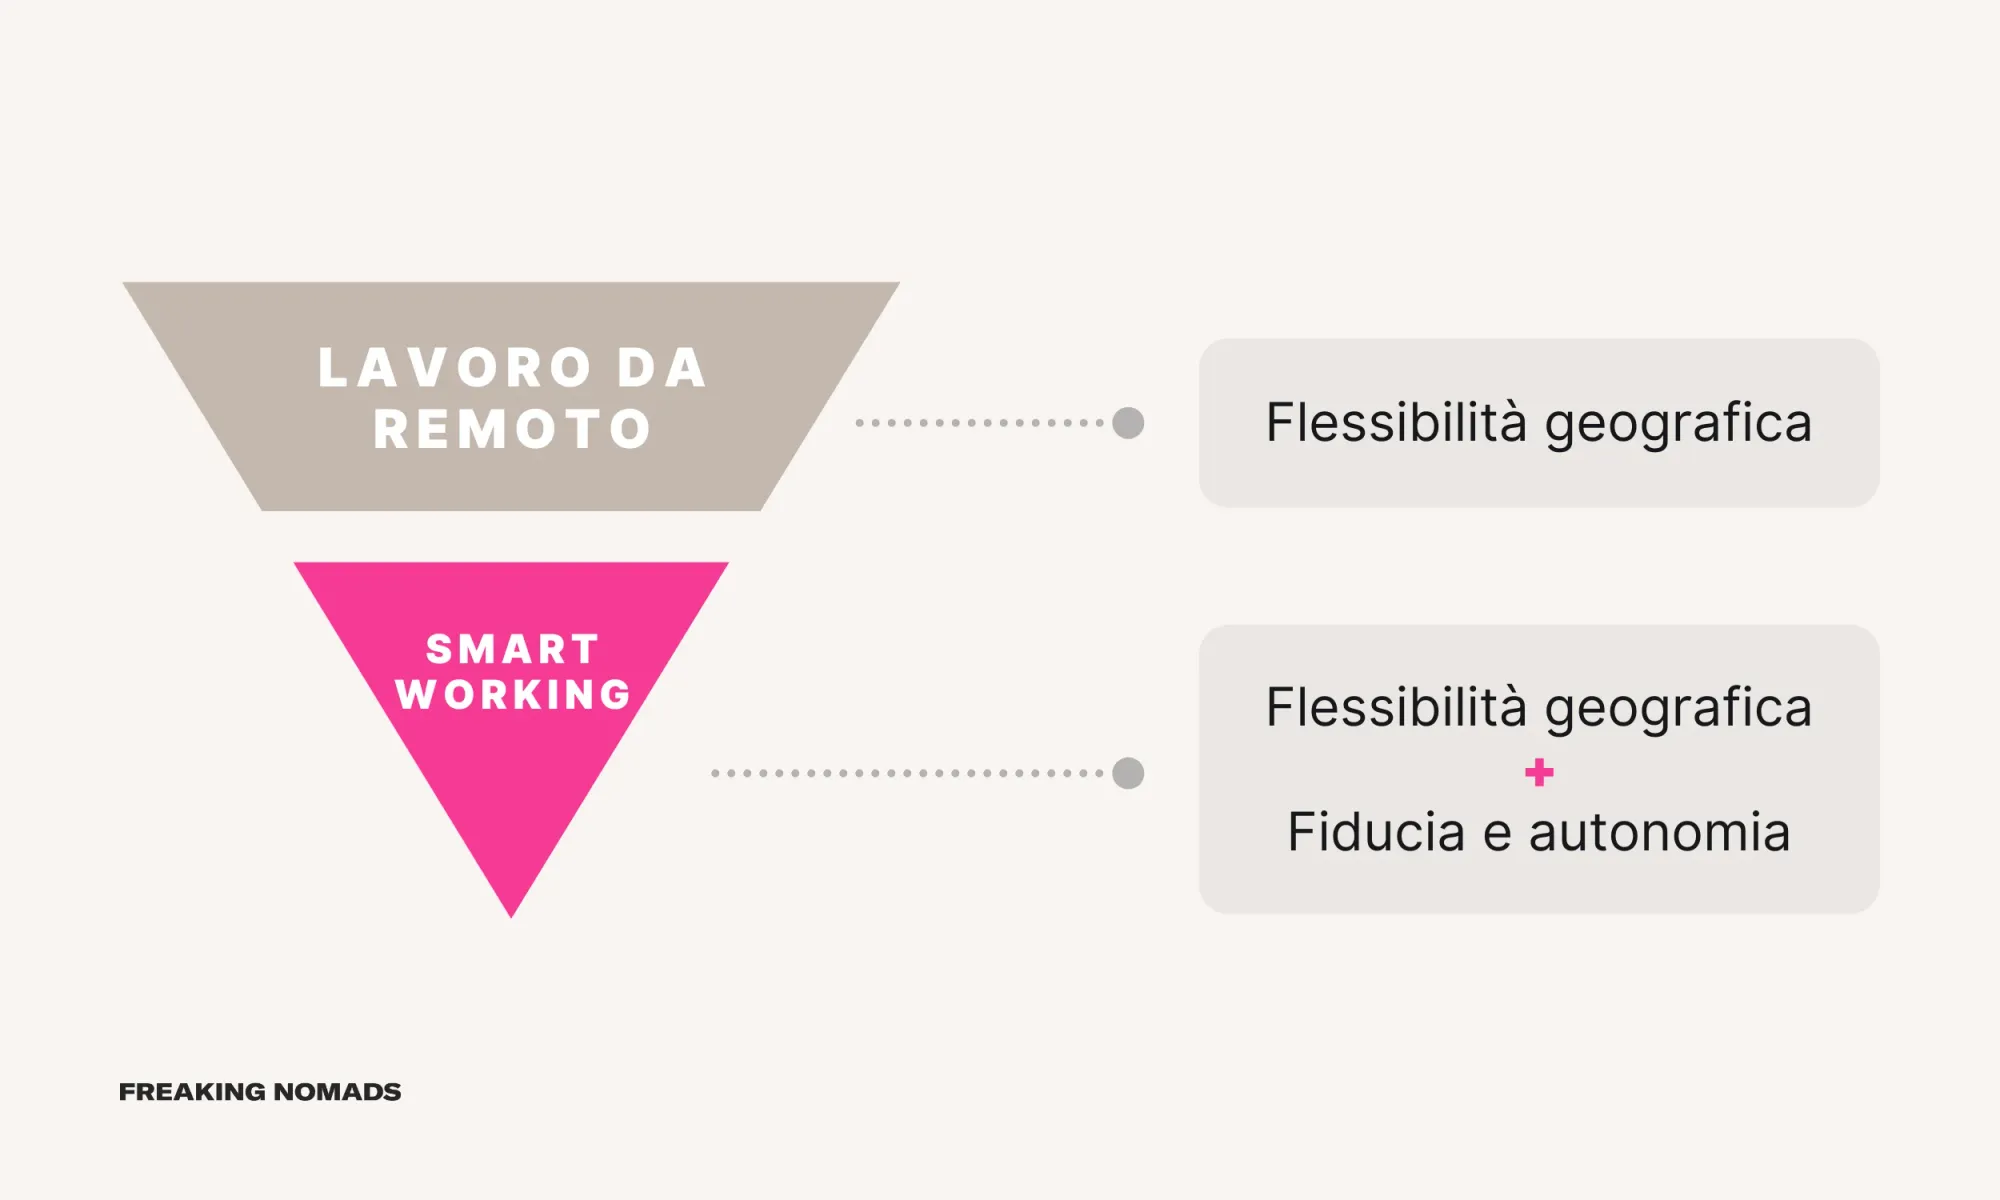 Lavoro da remoto versus smart working